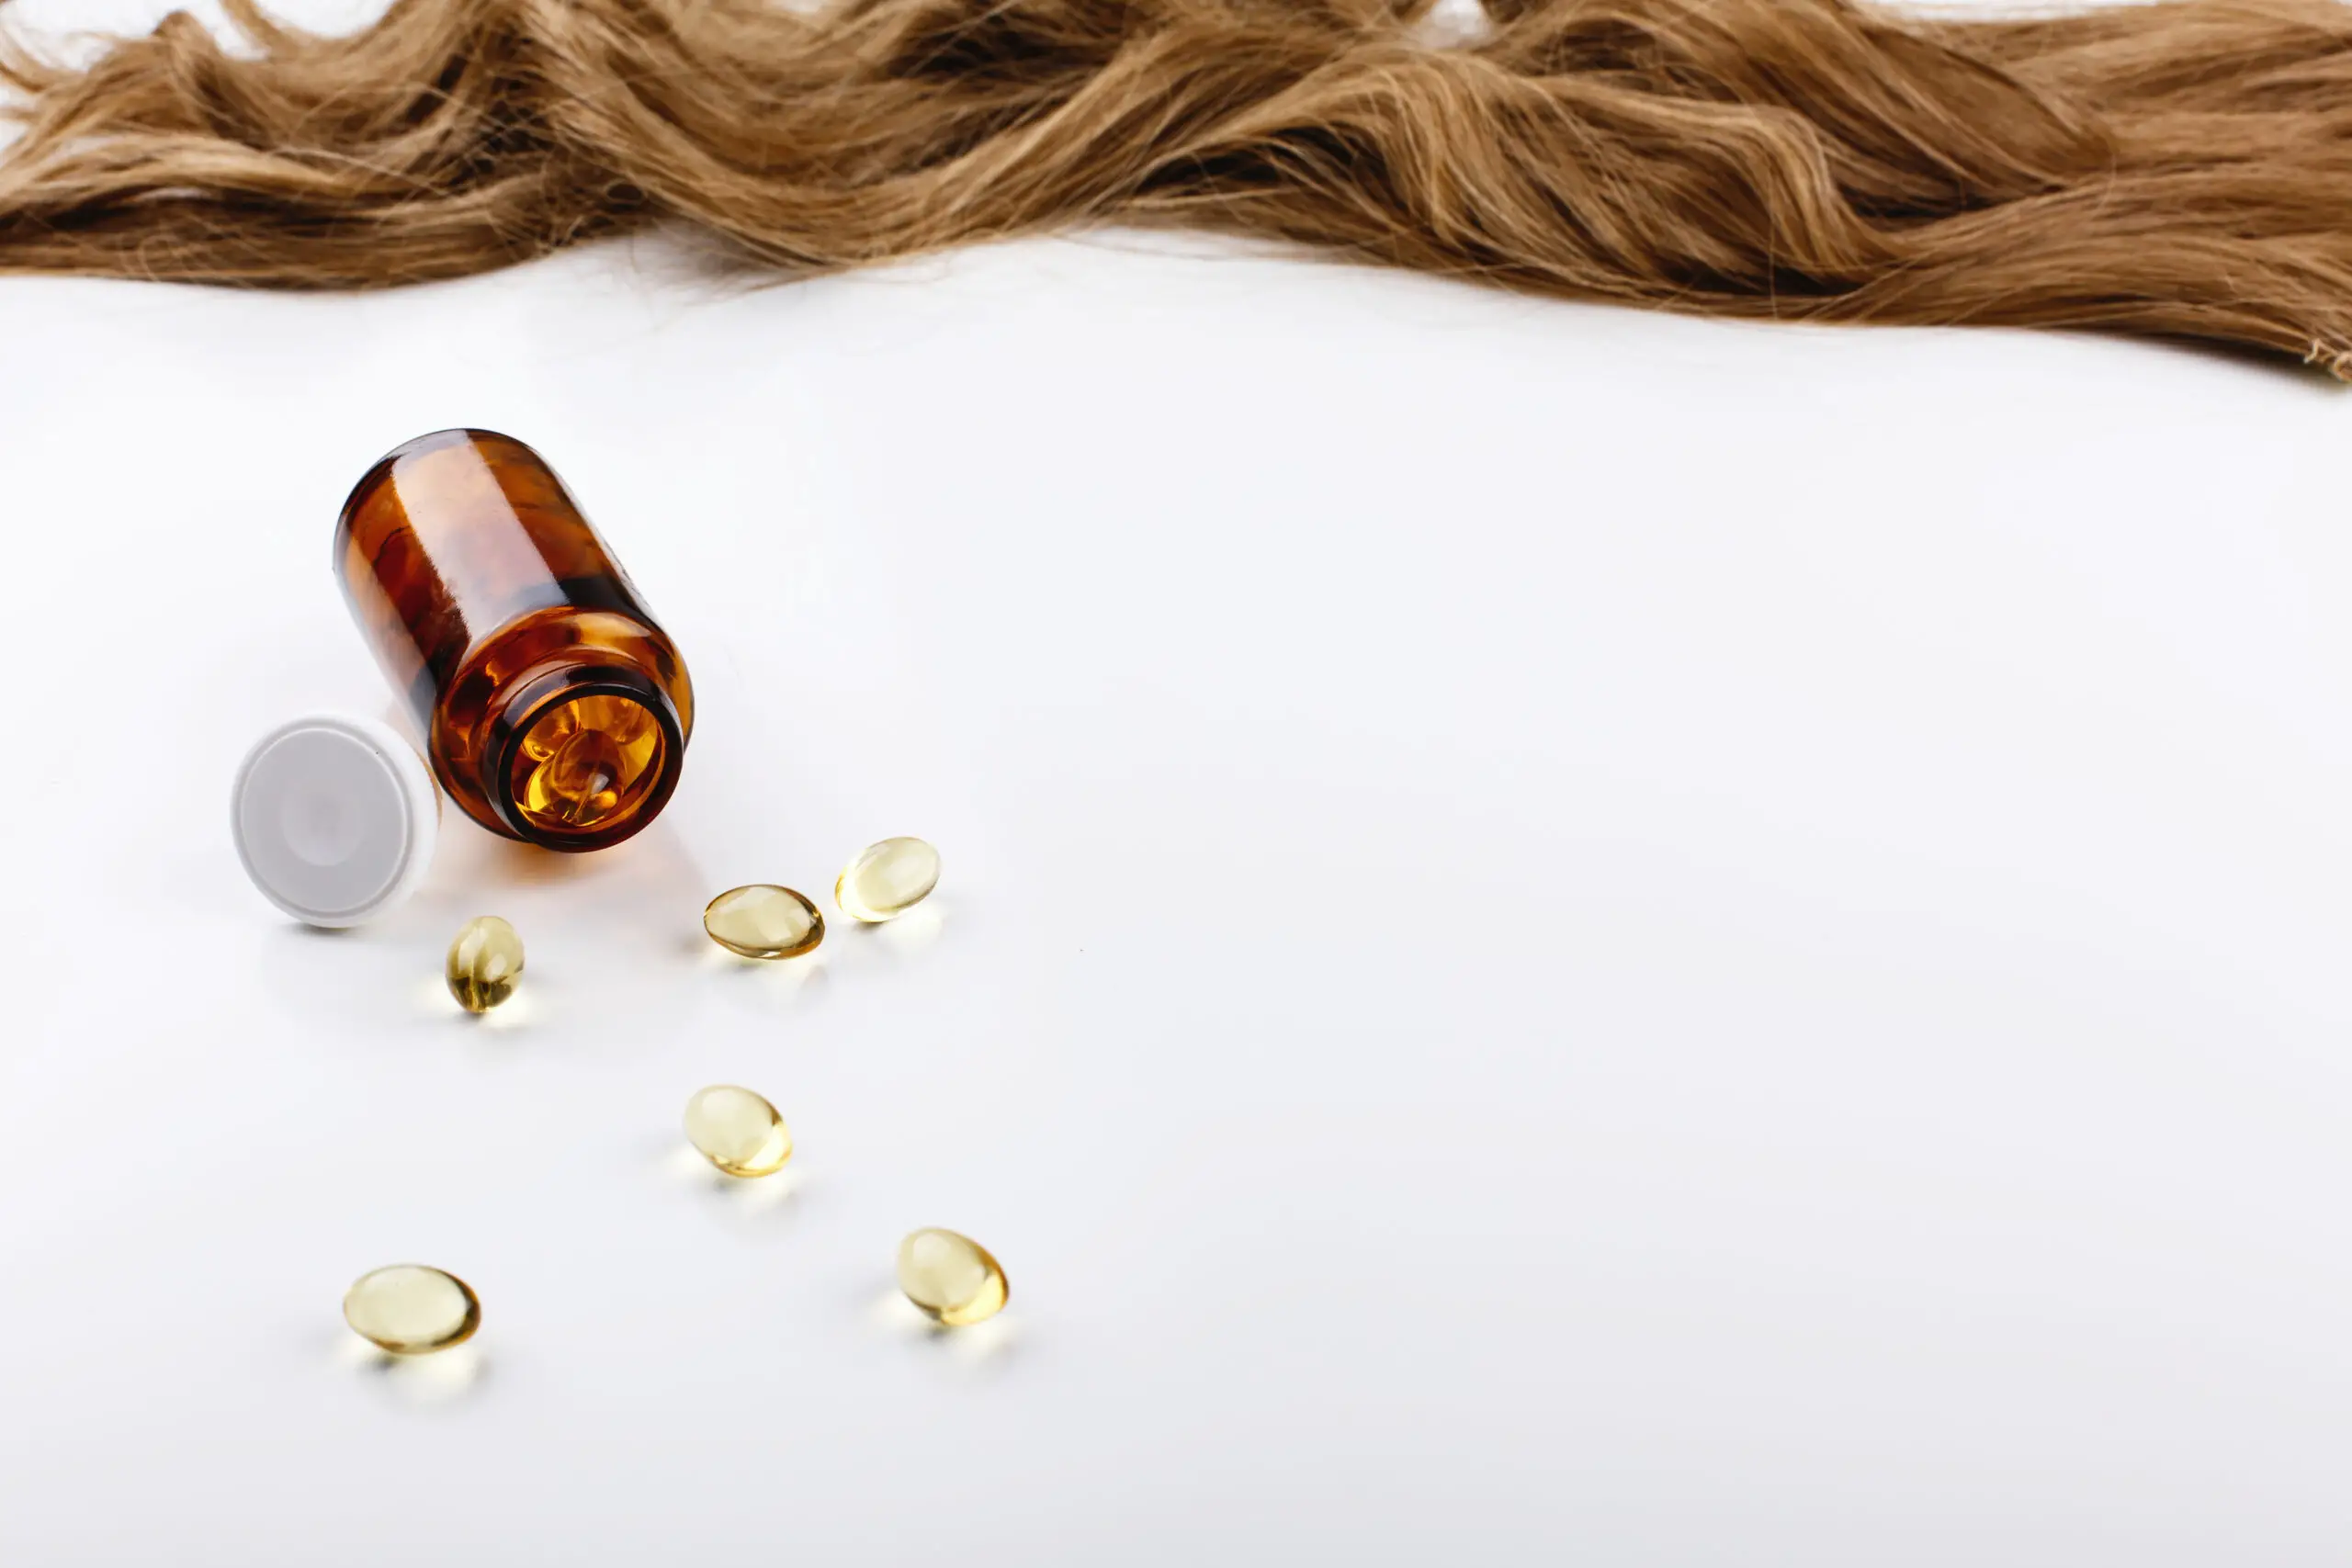 vitamin e capsule benefits for hair